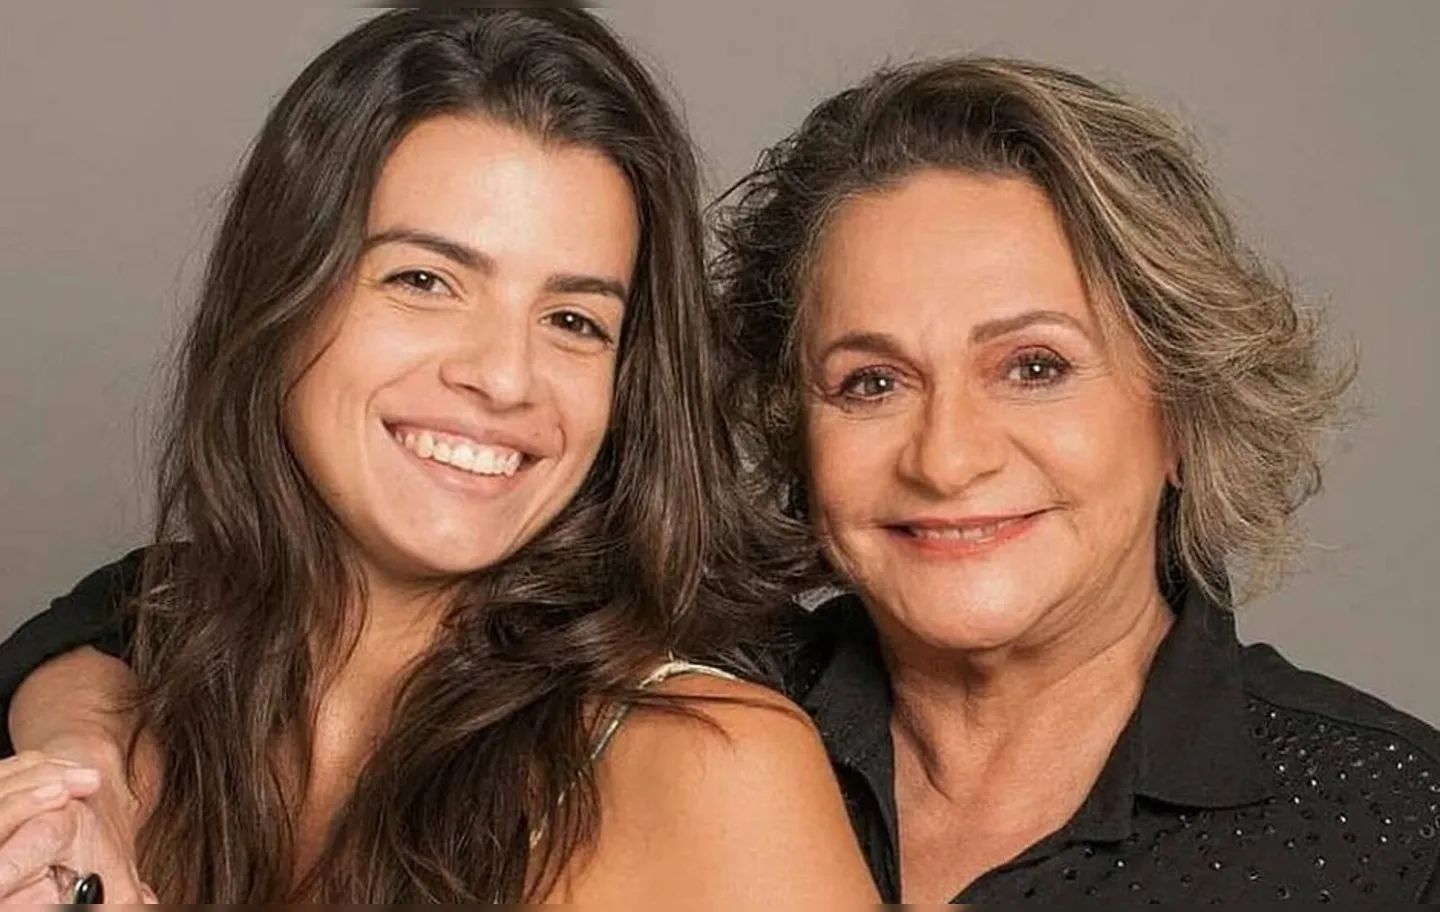 Fafy Siqueira e Fernanda Lorenzoni